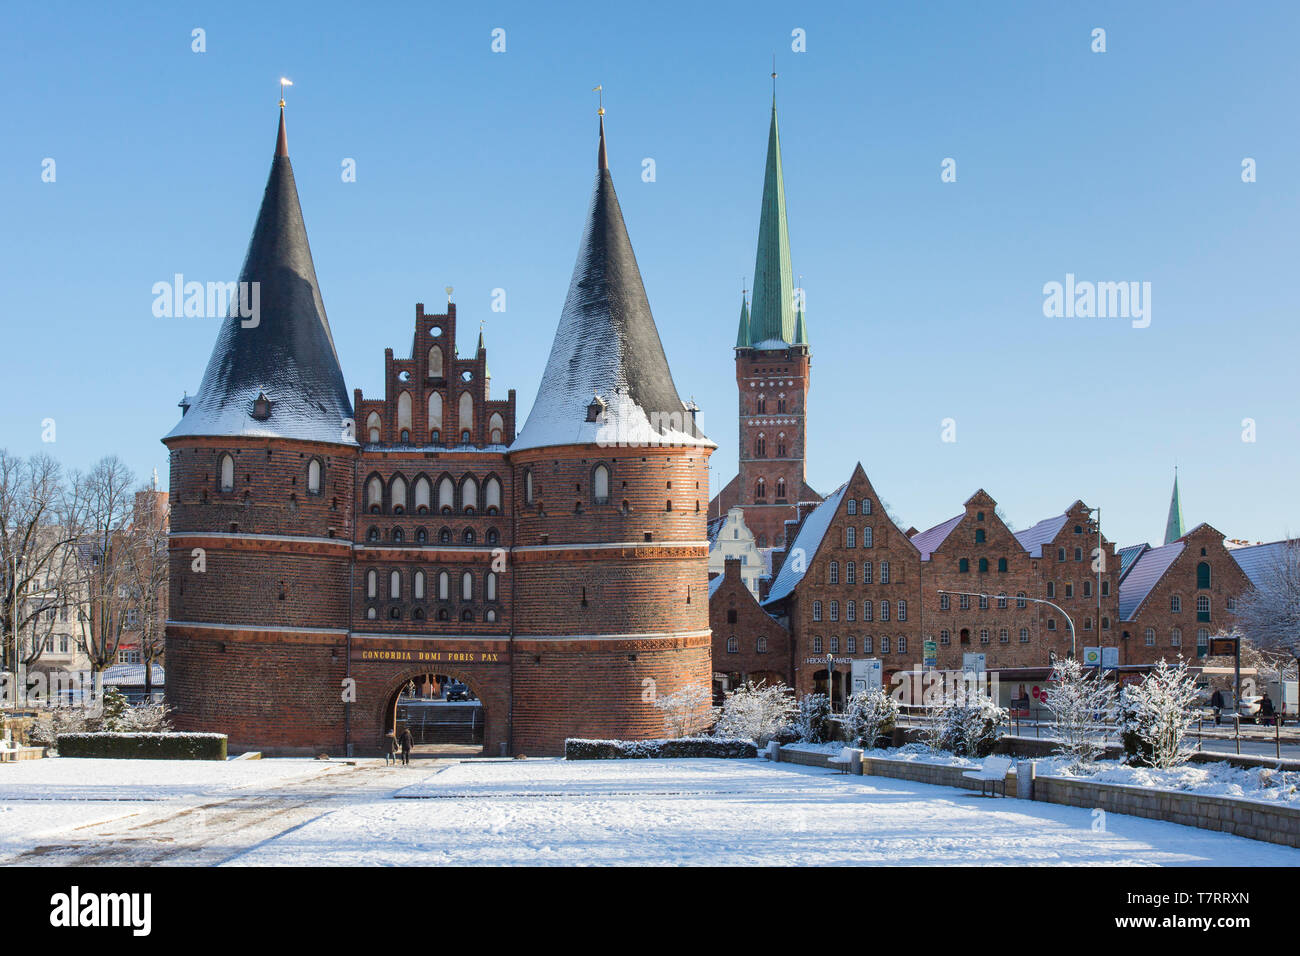 The Brick Gothic city gate Holstentor/ Holstein Gate in the Hanseatic town Lübeck in winter, Schleswig-Holstein, Germany Stock Photo